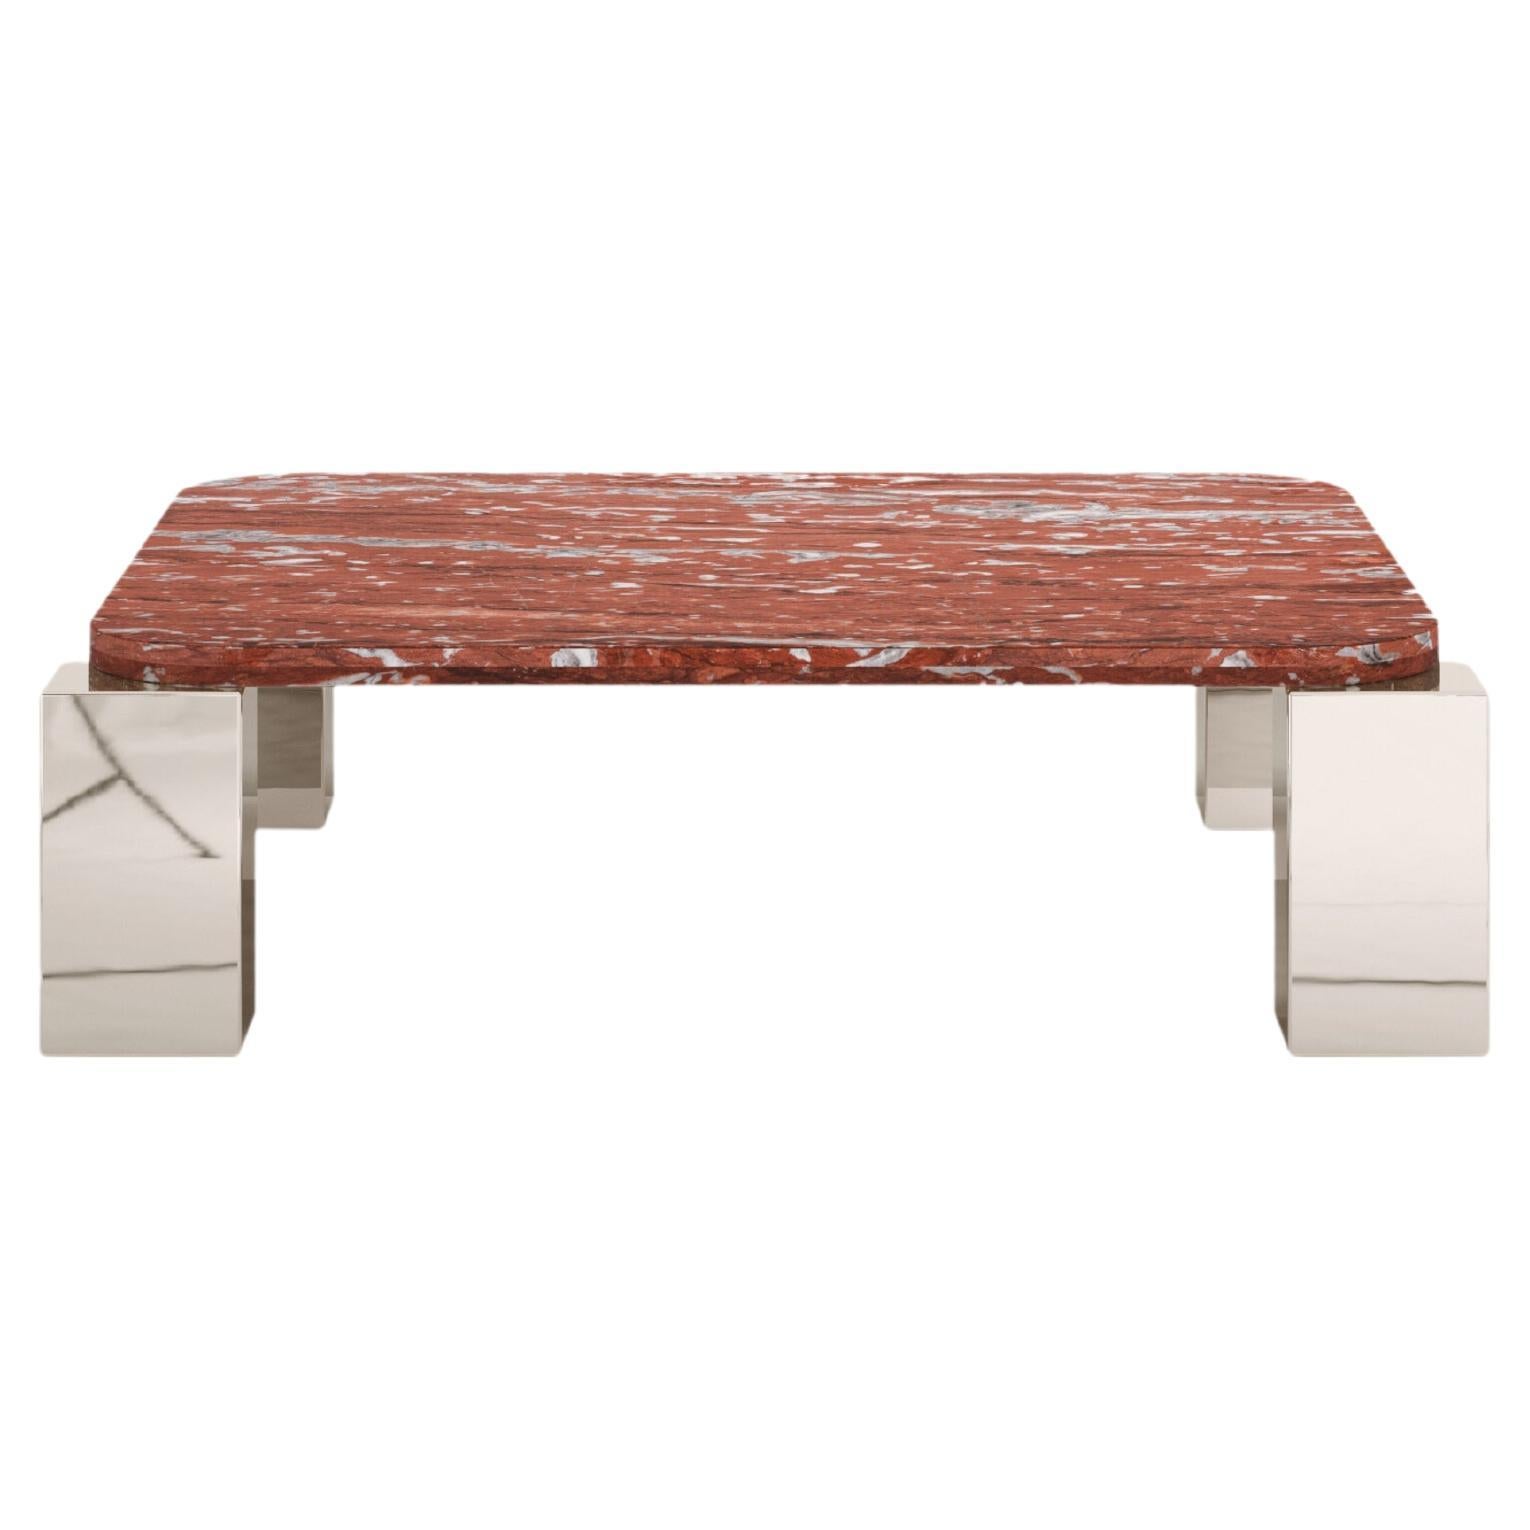 FORM(LA) Cubo Square Coffee Table 44”L x 44"W x 14”H Francia Marble & Chrome